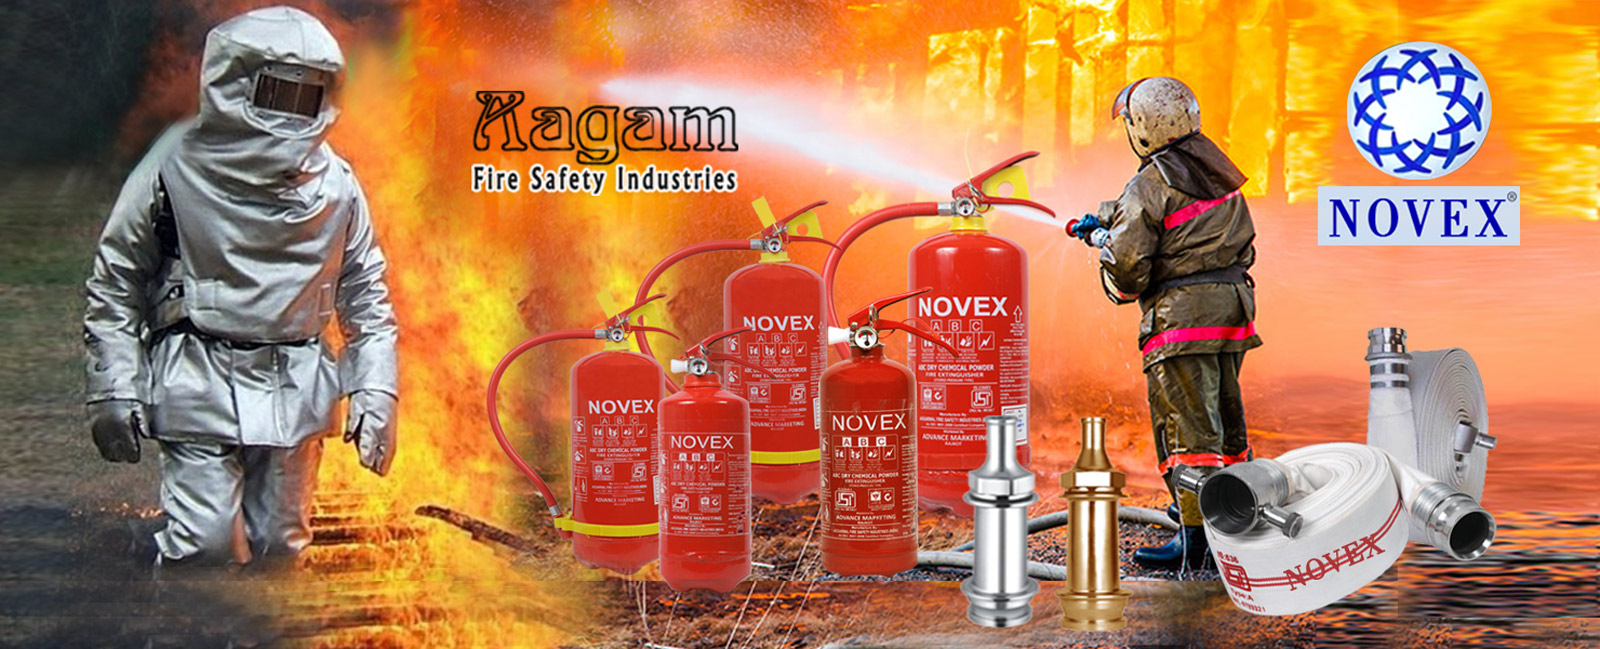 Fire Extinguishers System Manufactures Rajkot Gujarat India